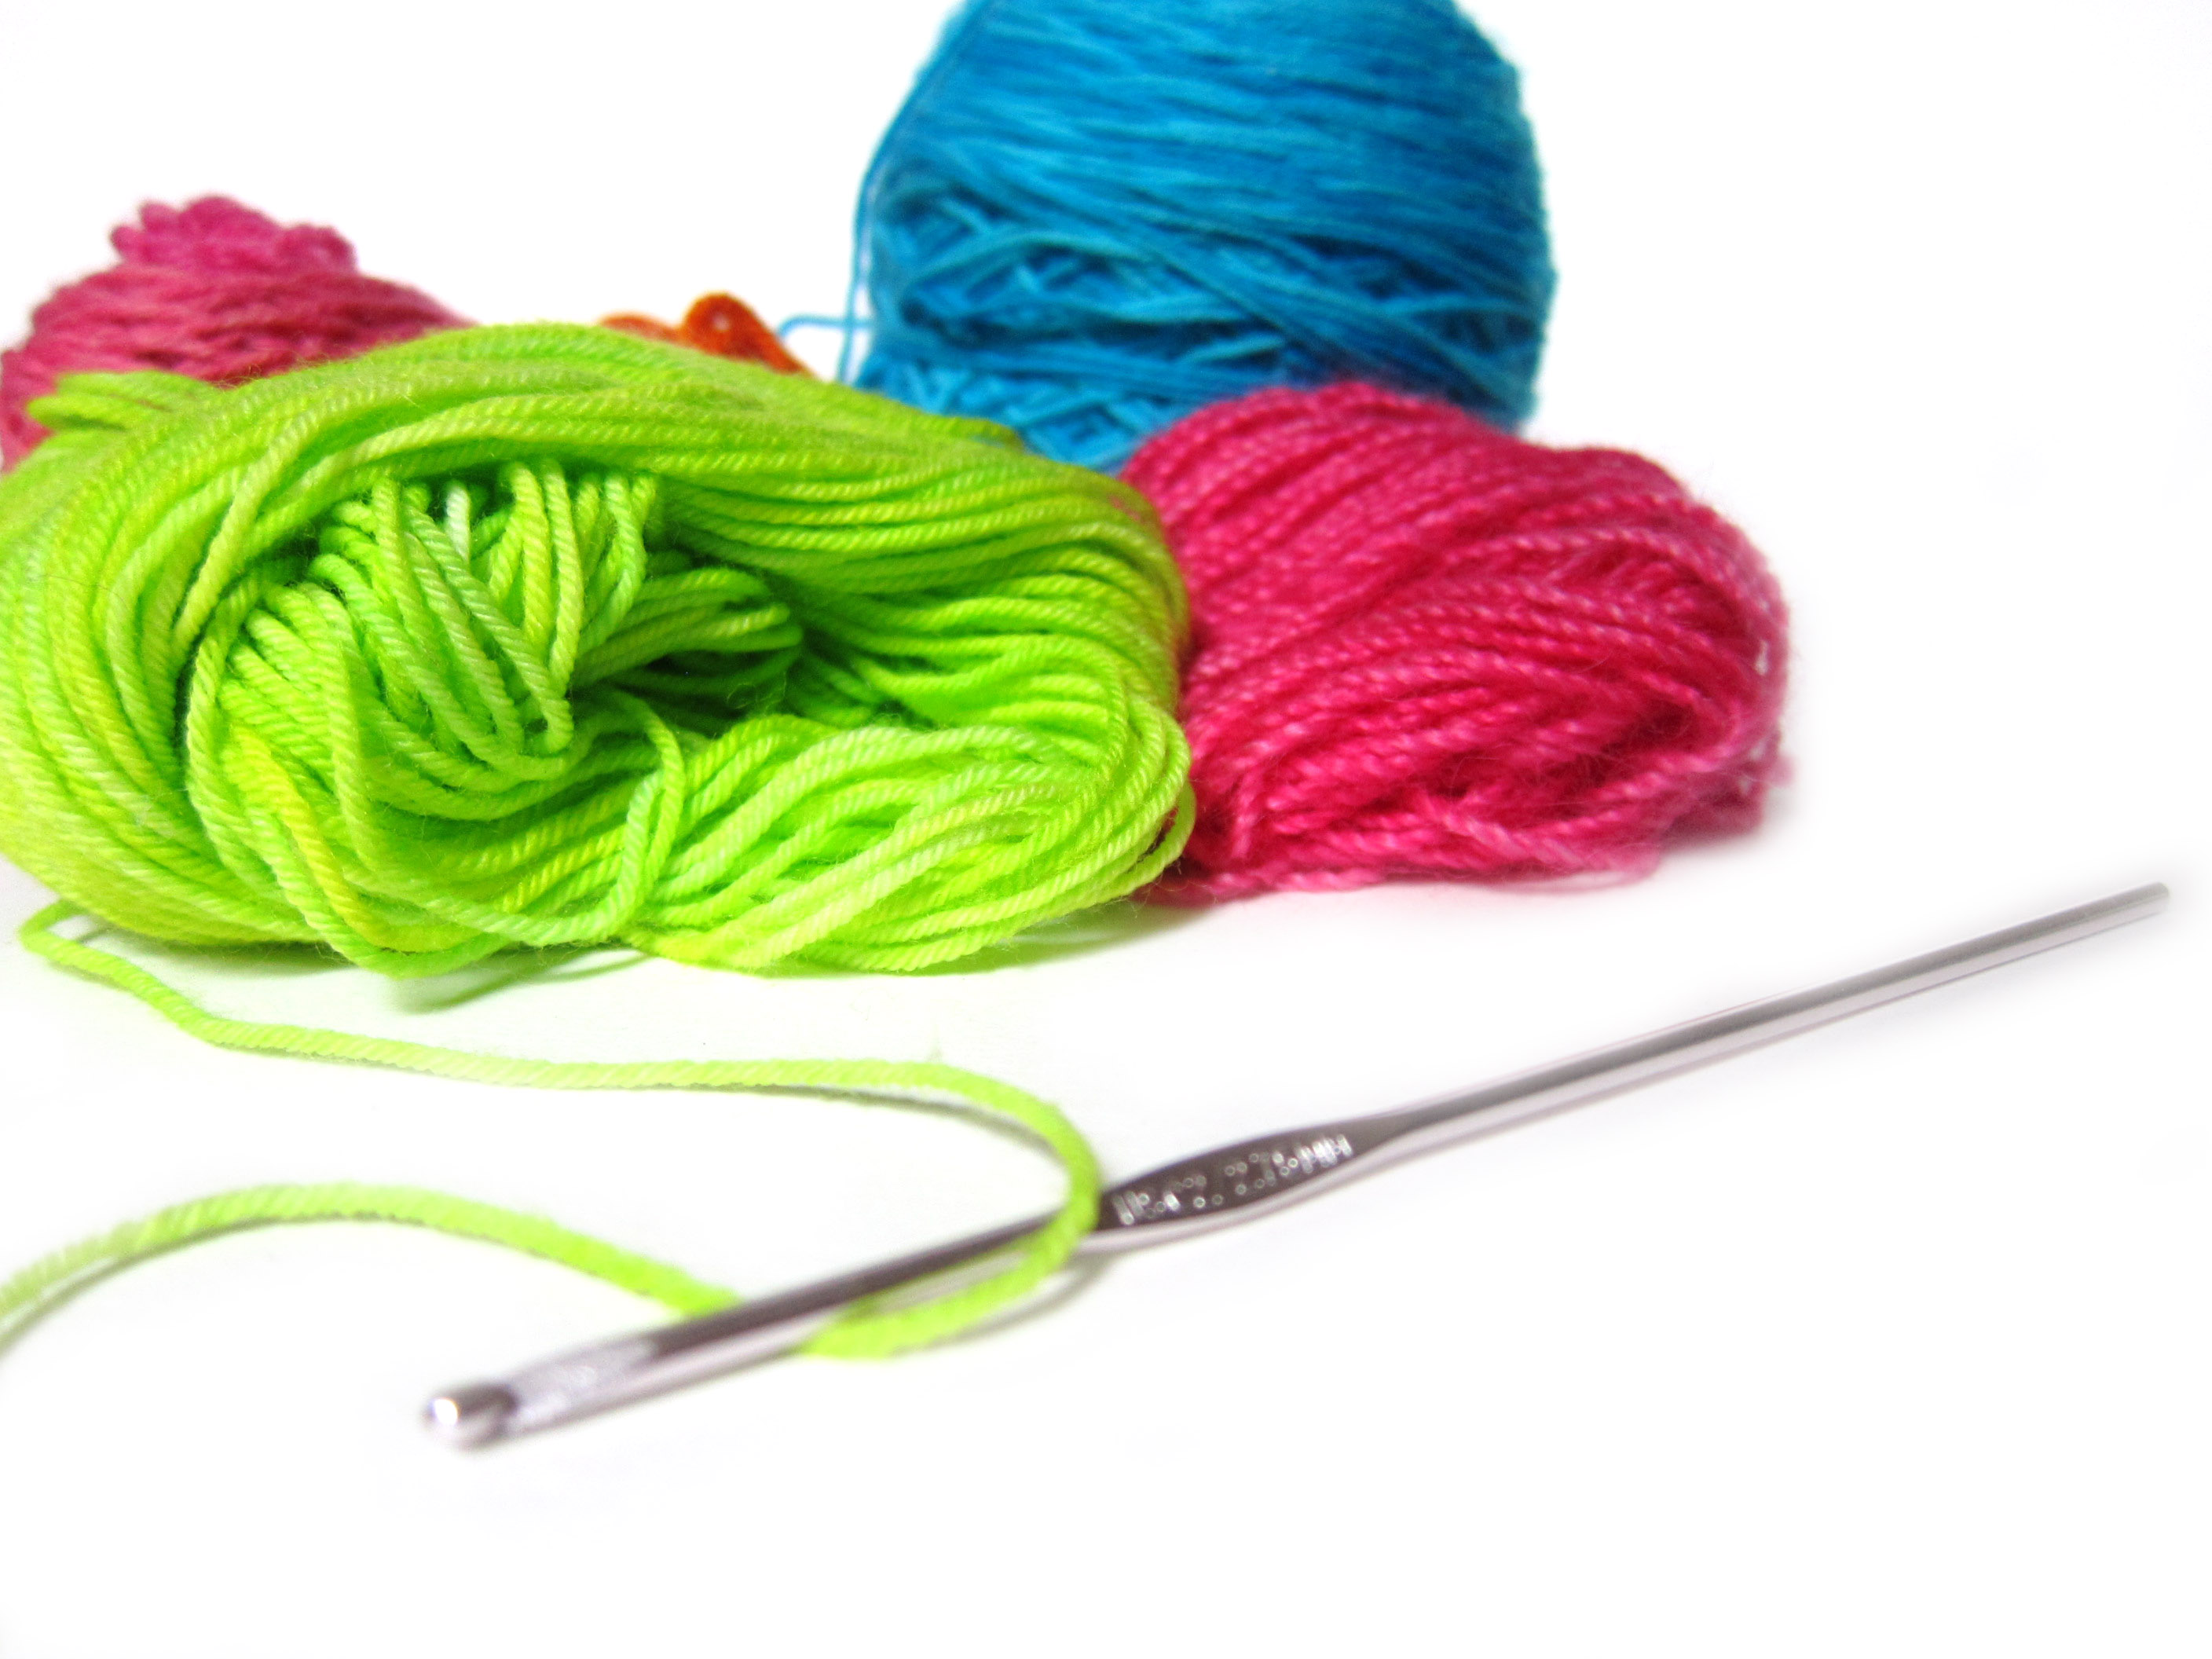 Crochet Hook And Yarn Wallpaper Crochet Hook And Ball Of Yarn